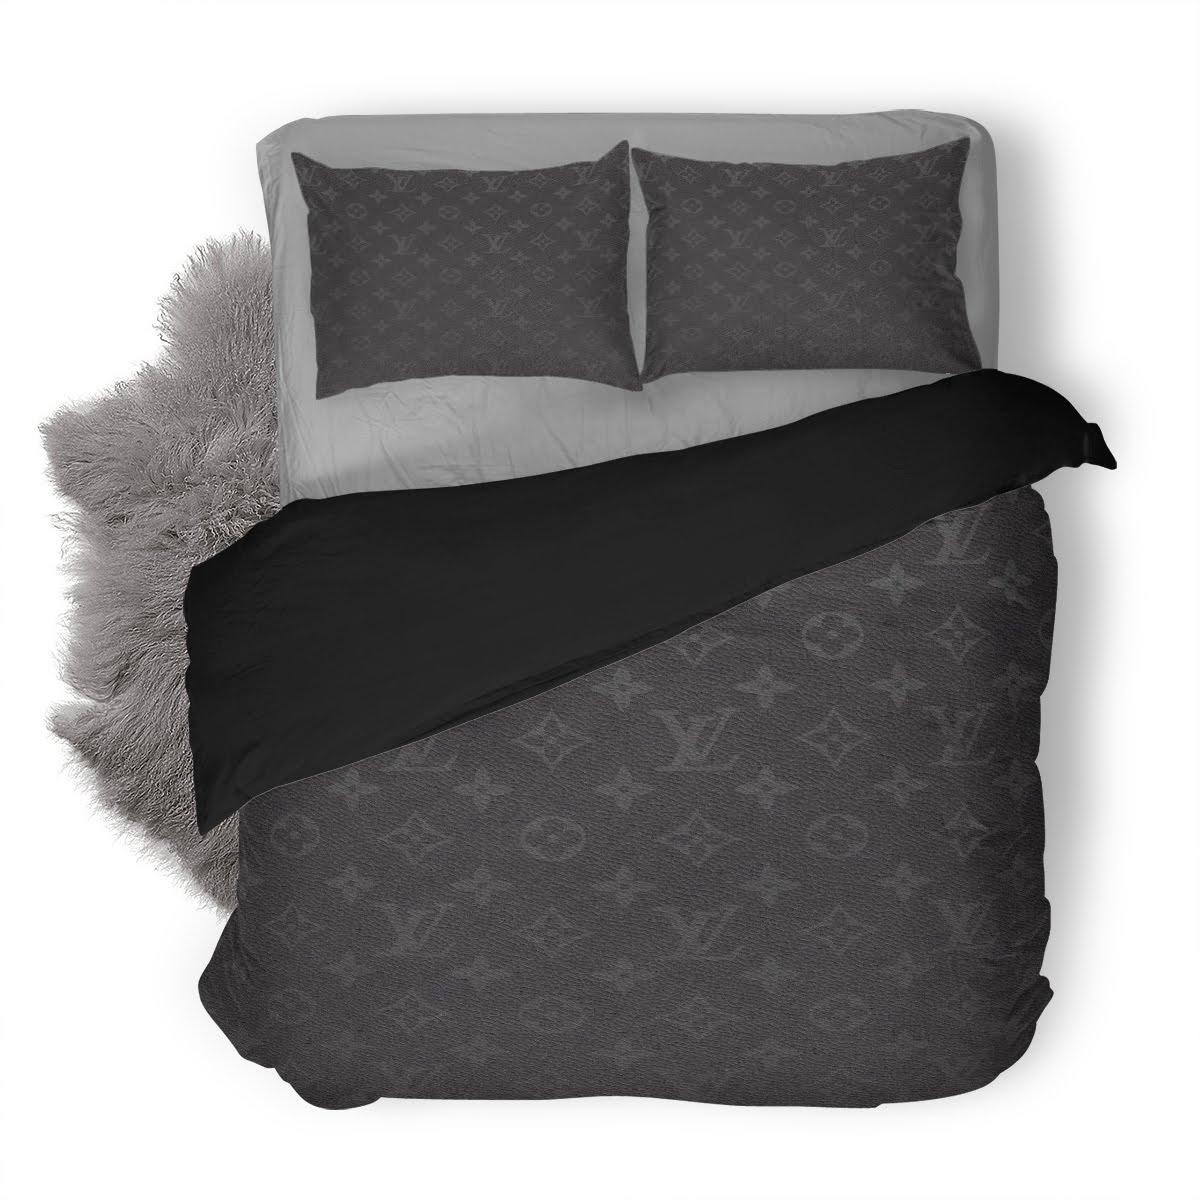 Vuitton Duvet Cover Bedding Set